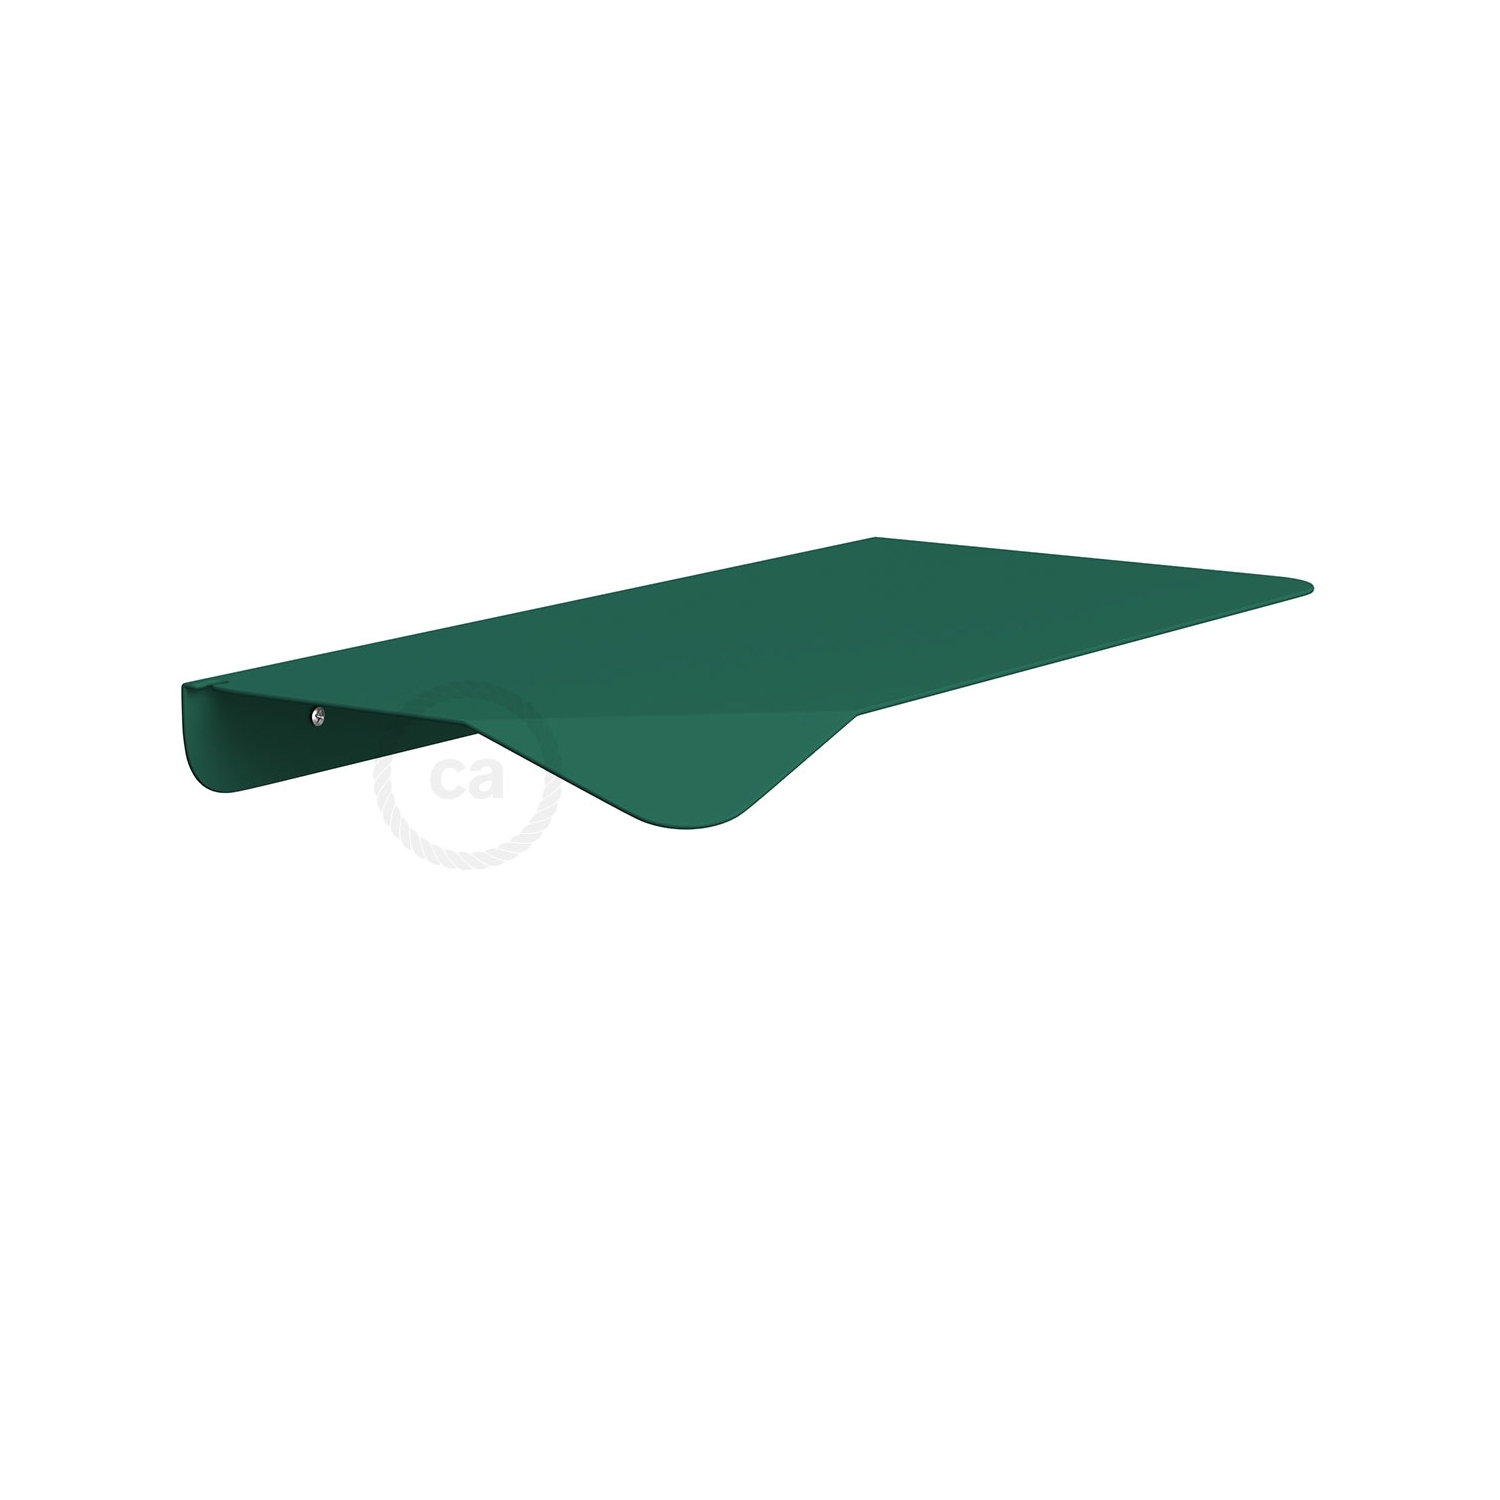 Magnetico®-Shelf Green, metal shelf for Magnetico®-Plug